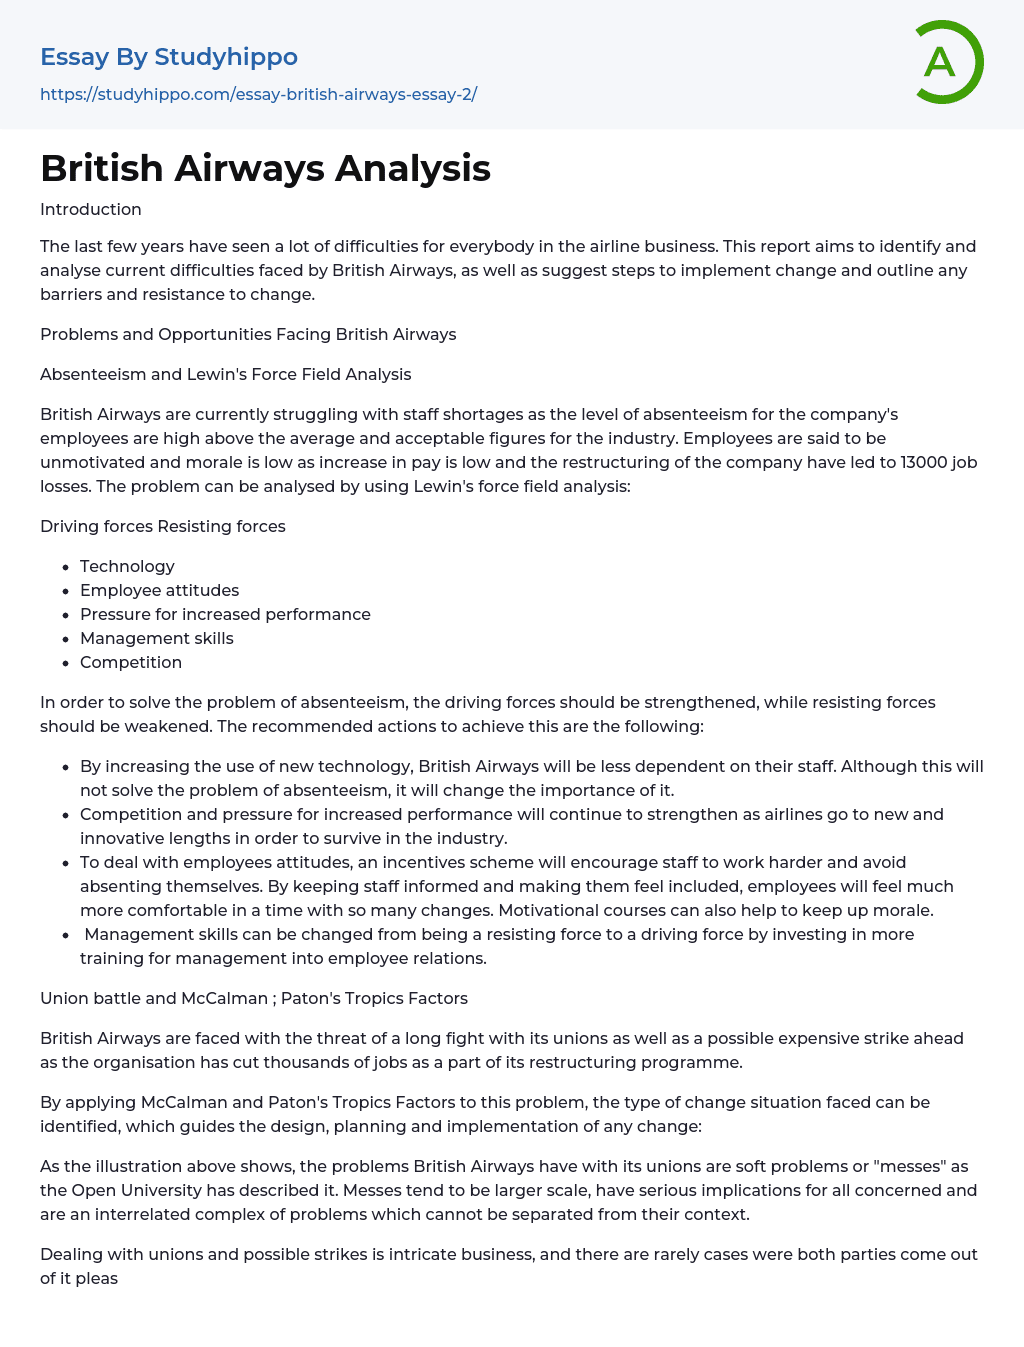 British Airways Analysis Essay Example